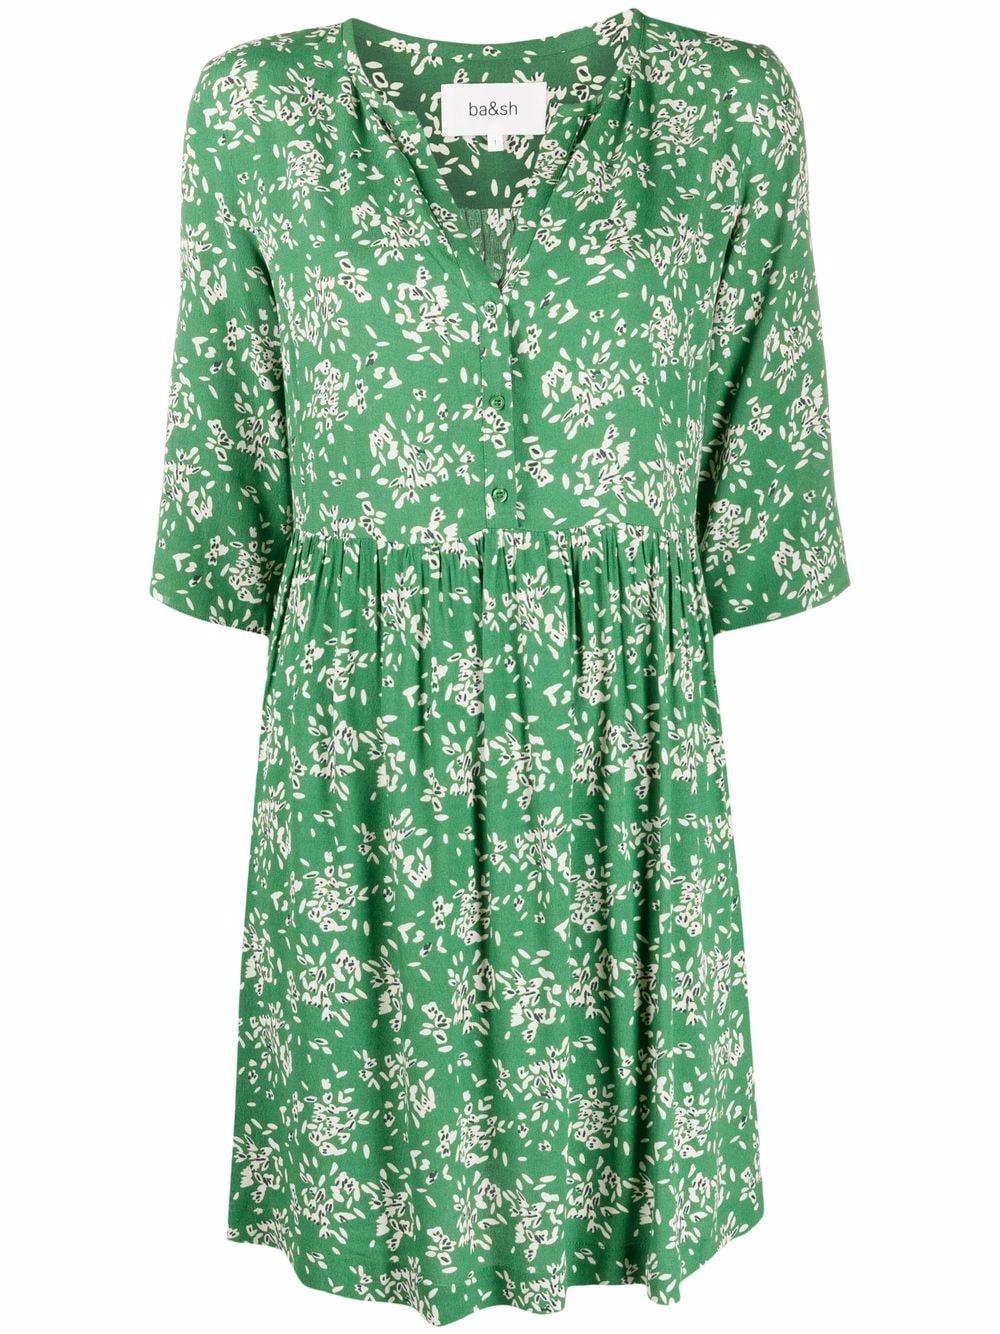 Ba&sh Vlada Floral-print Dress in Green | Lyst